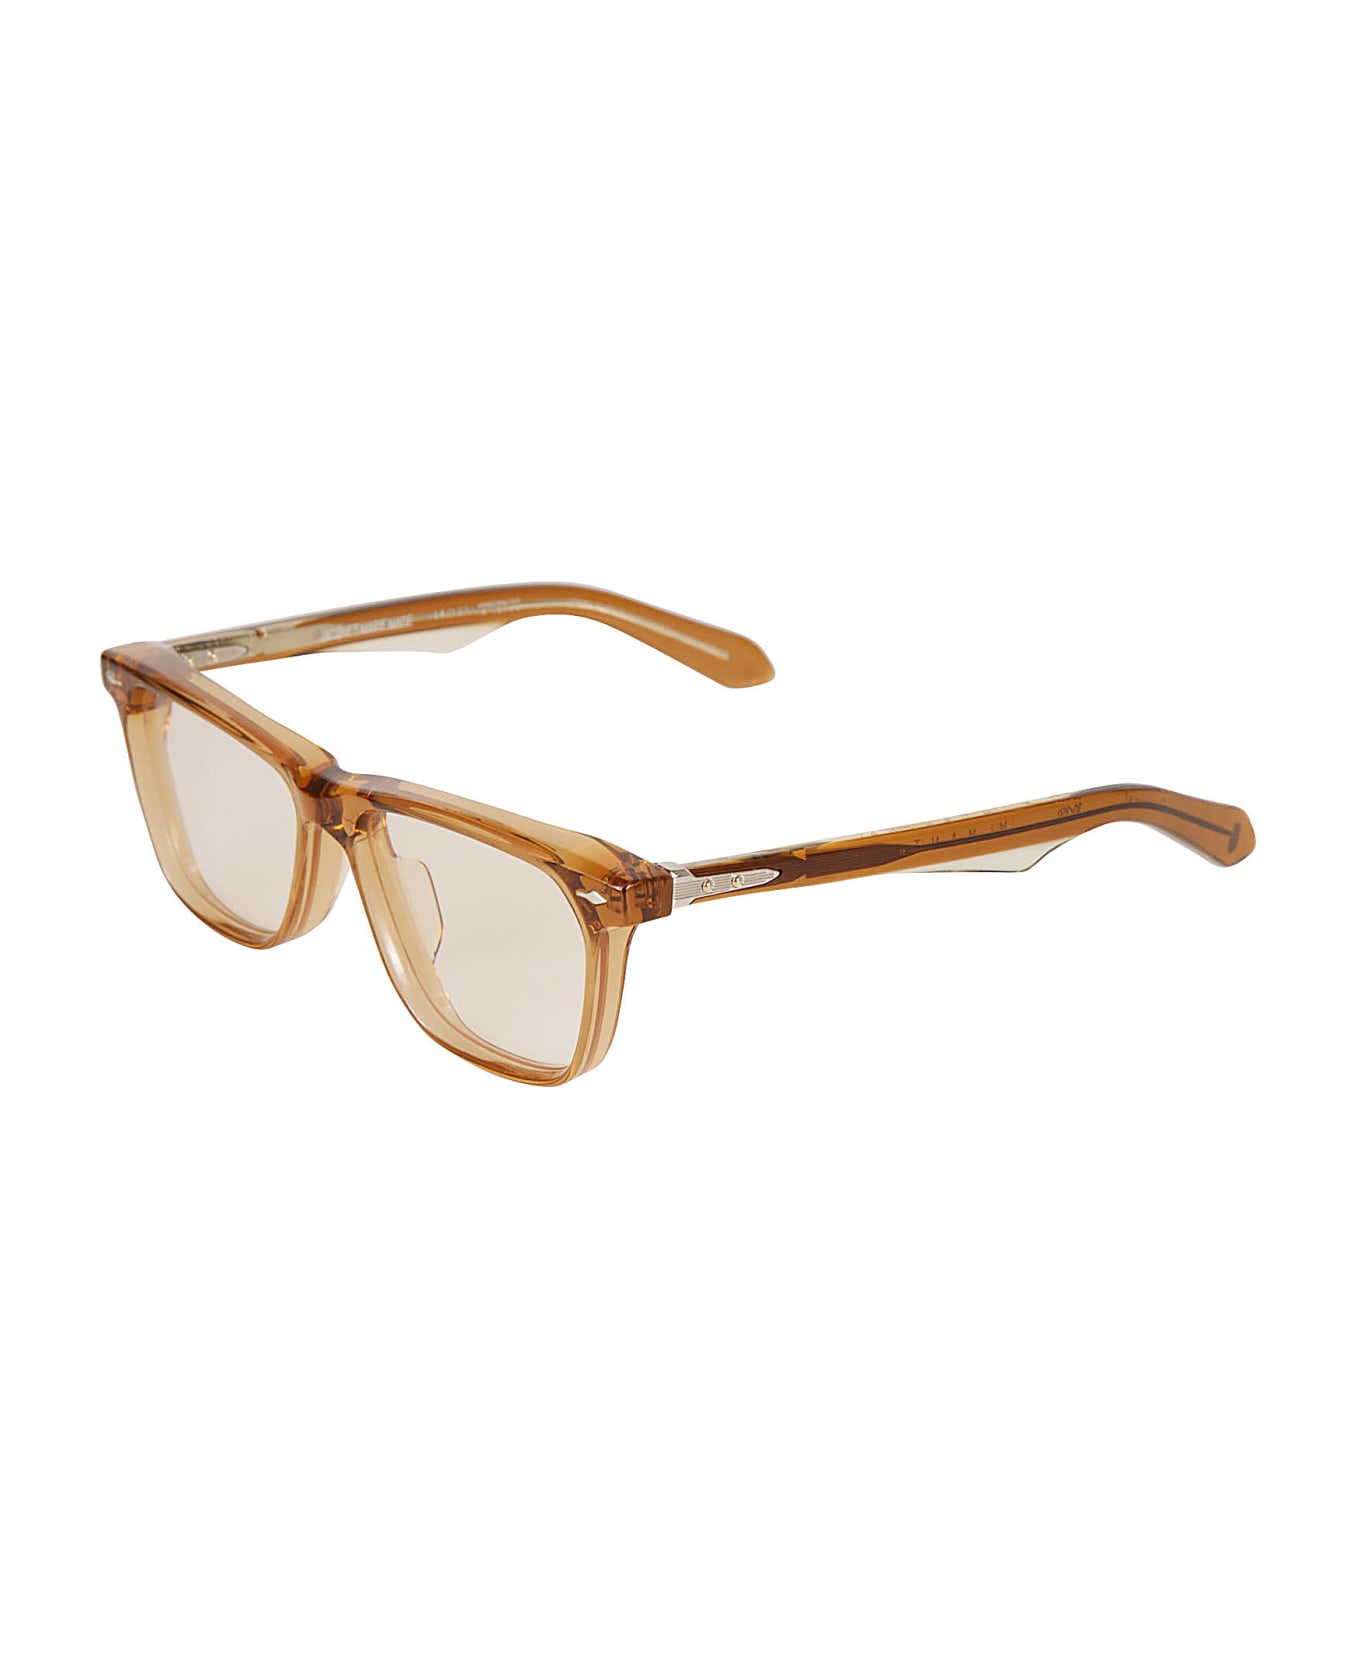 Jacques Marie Mage Wayfarer Classic Sunglasses - WHISKEY